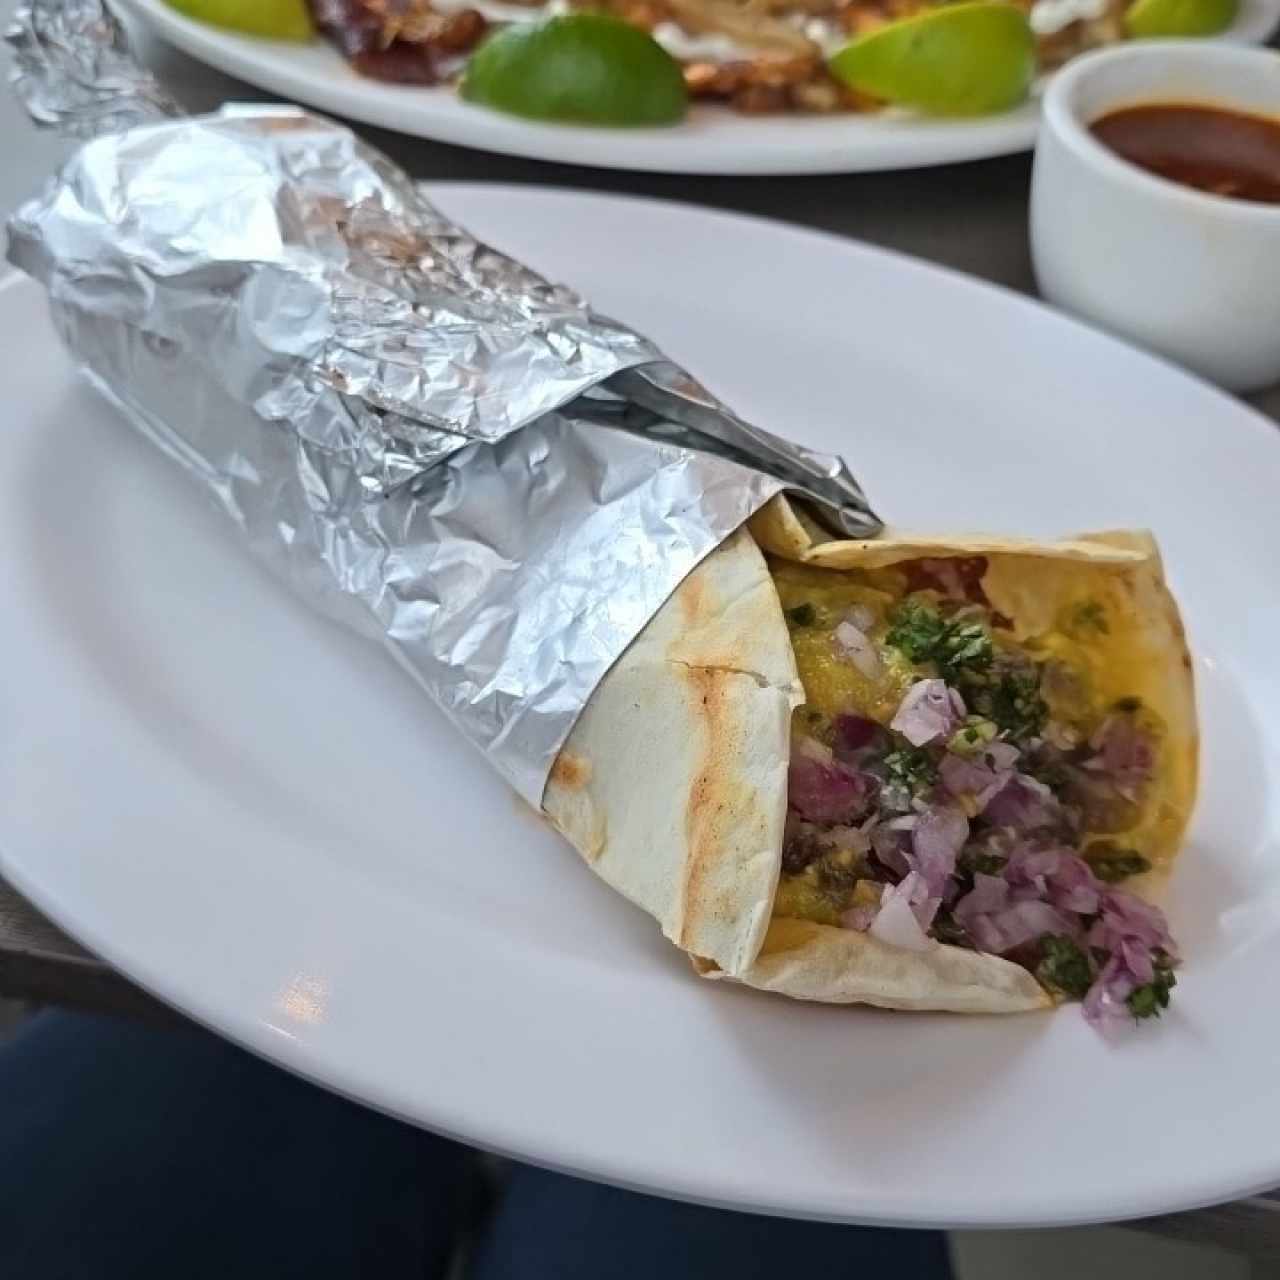 Chingon - Burrito chingon